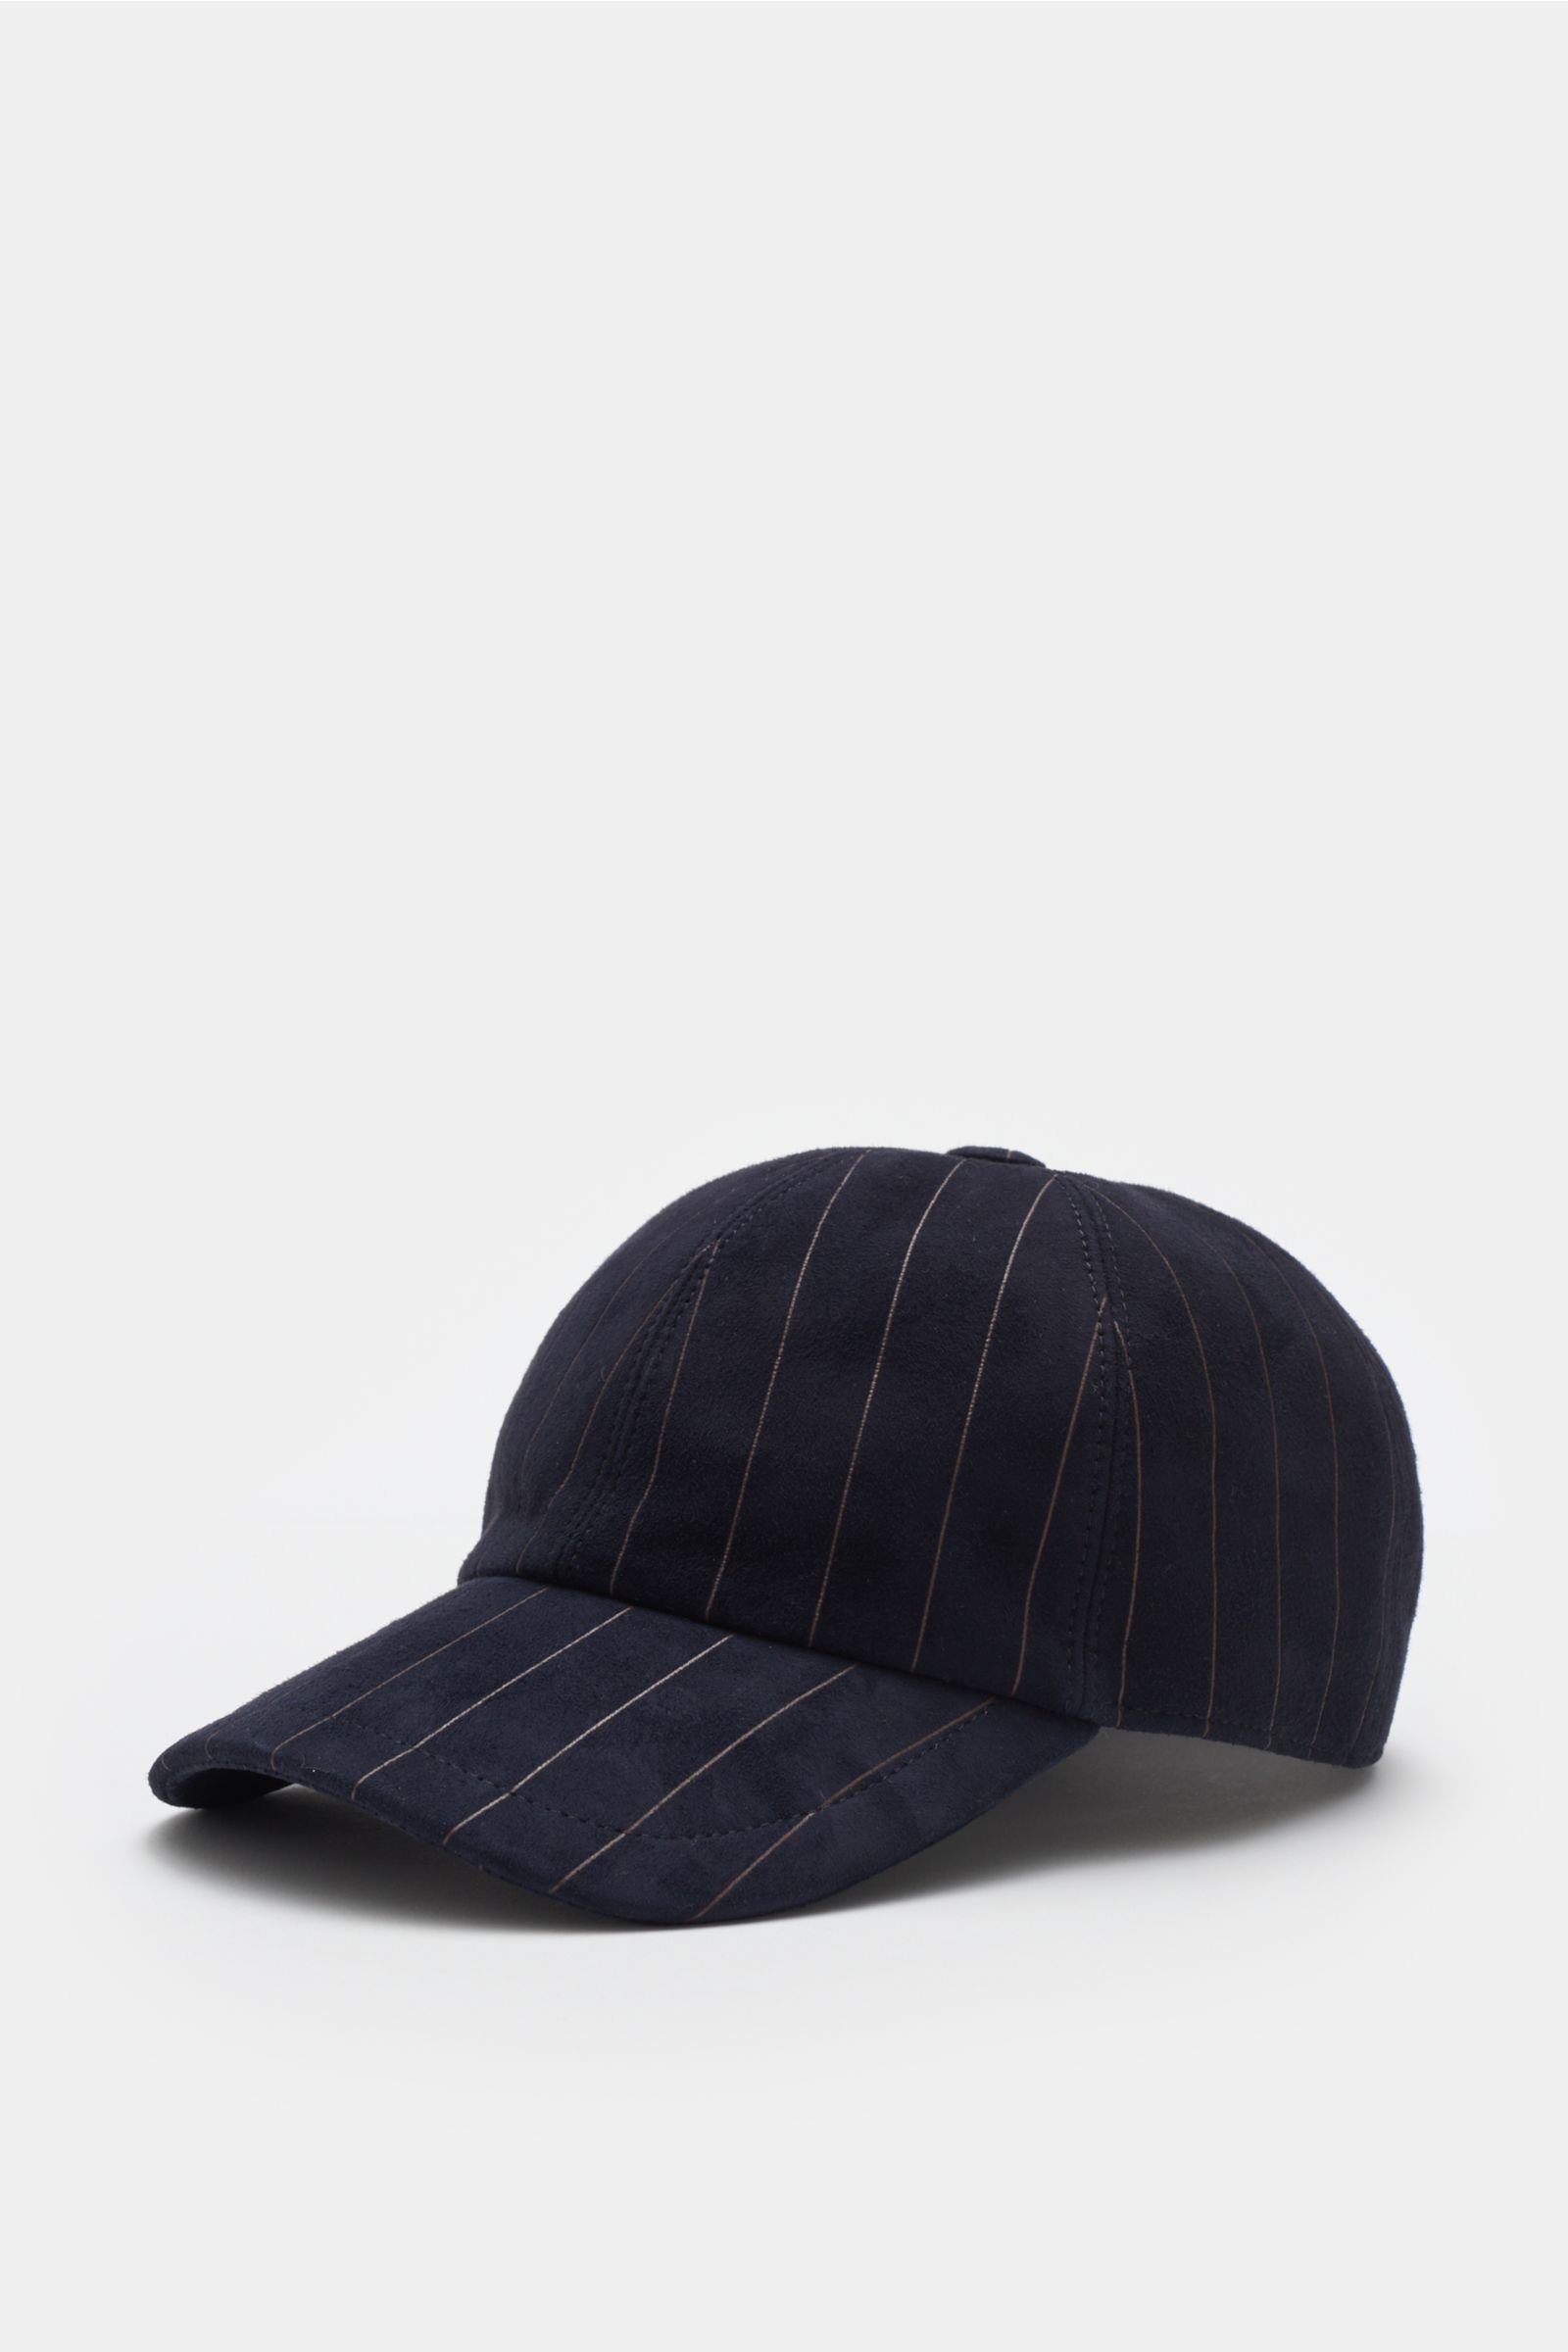 Leather baseball cap navy striped